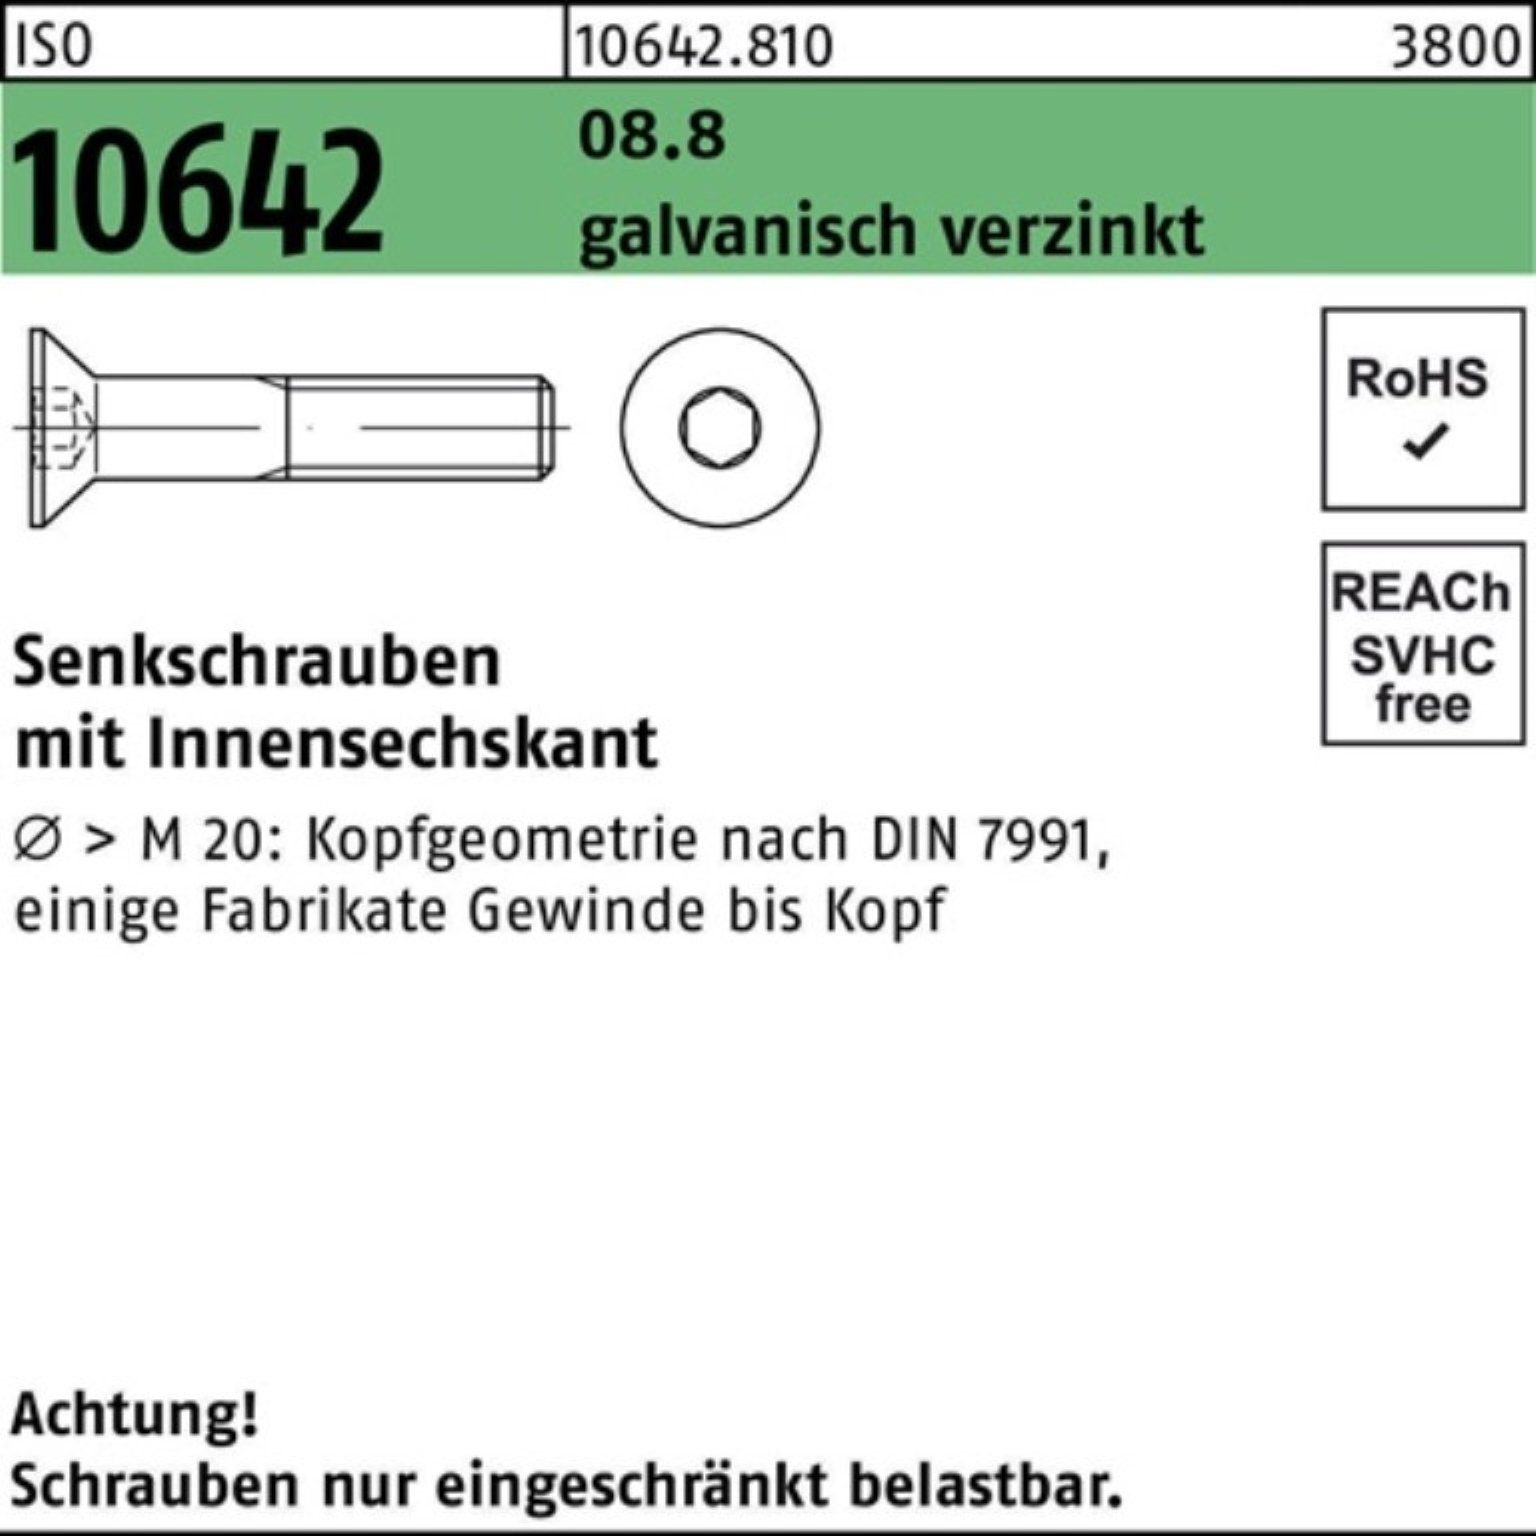 Senkschraube Senkschraube 200 200er Reyher 10642 galv.verz. 10 ISO Innen-6kt Pack M8x 8.8